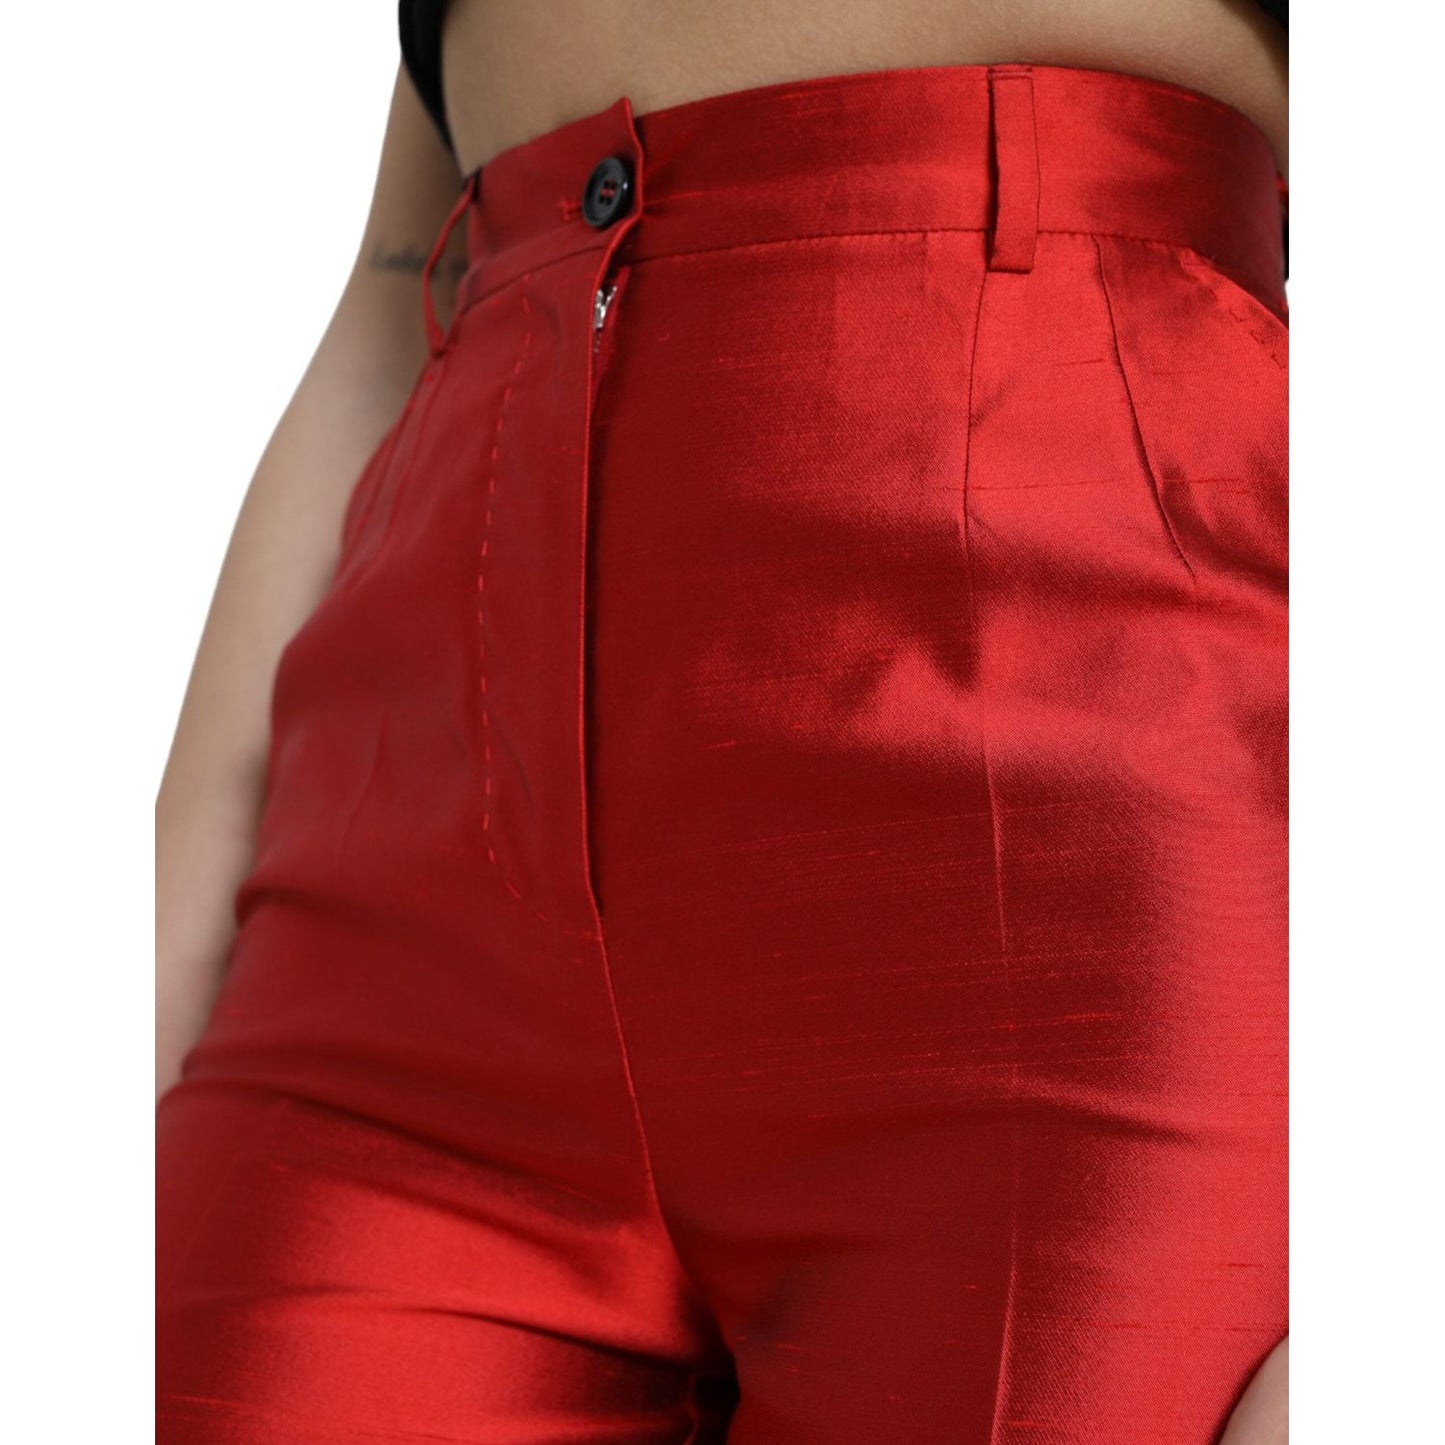 Dolce & Gabbana Elegant High Waist Wide Leg Silk Pants red-satin-silk-high-waist-wide-leg-pants